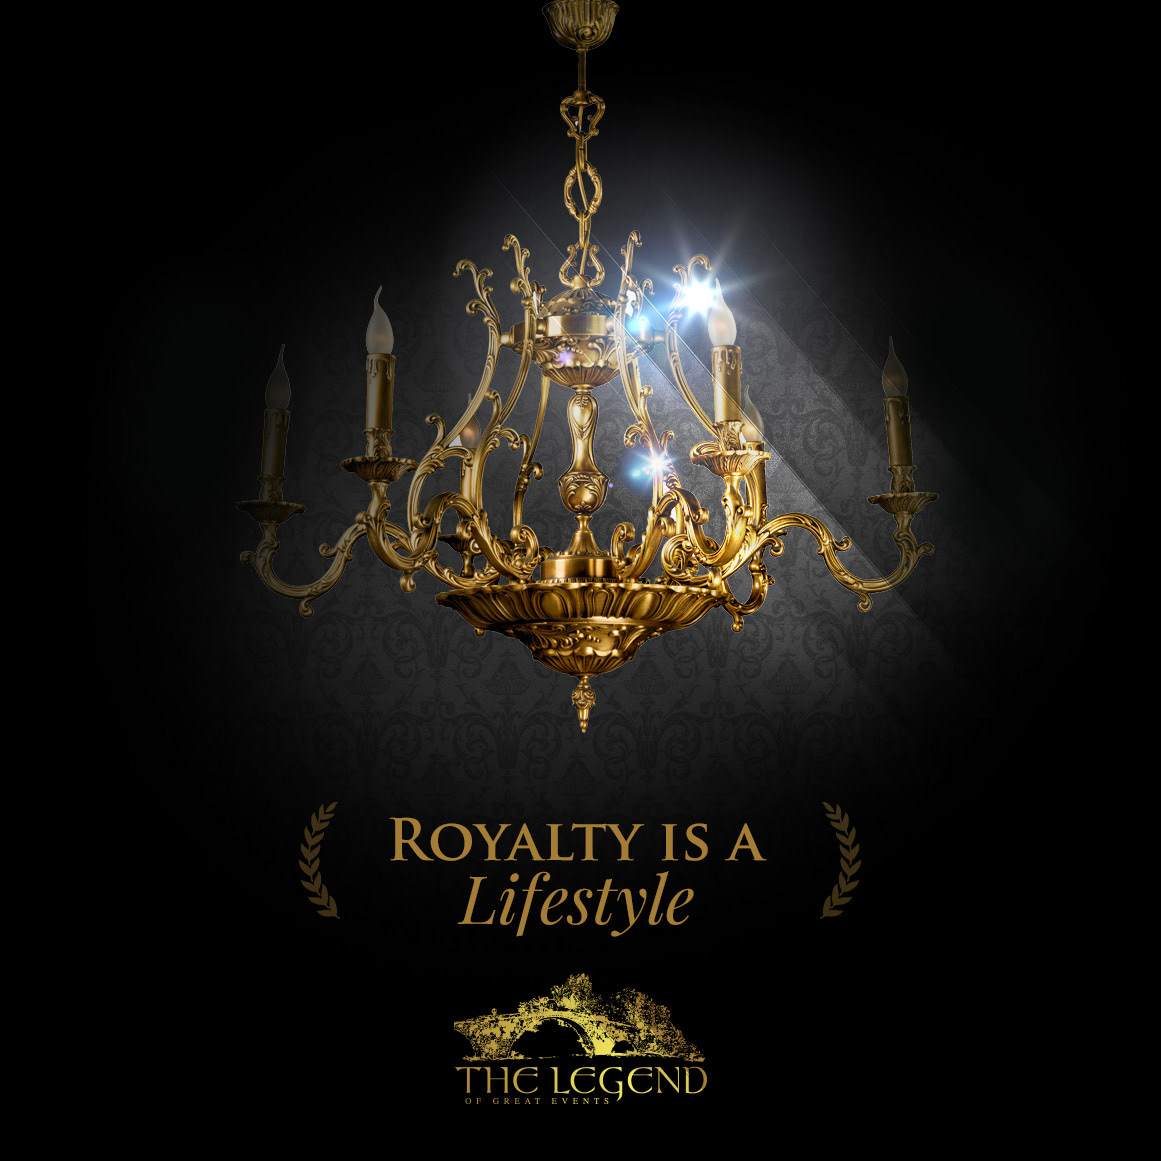 legend nahr el kaleb the legend venue wedding royal majesty glorius Web ads dark gold hidden wow amazing